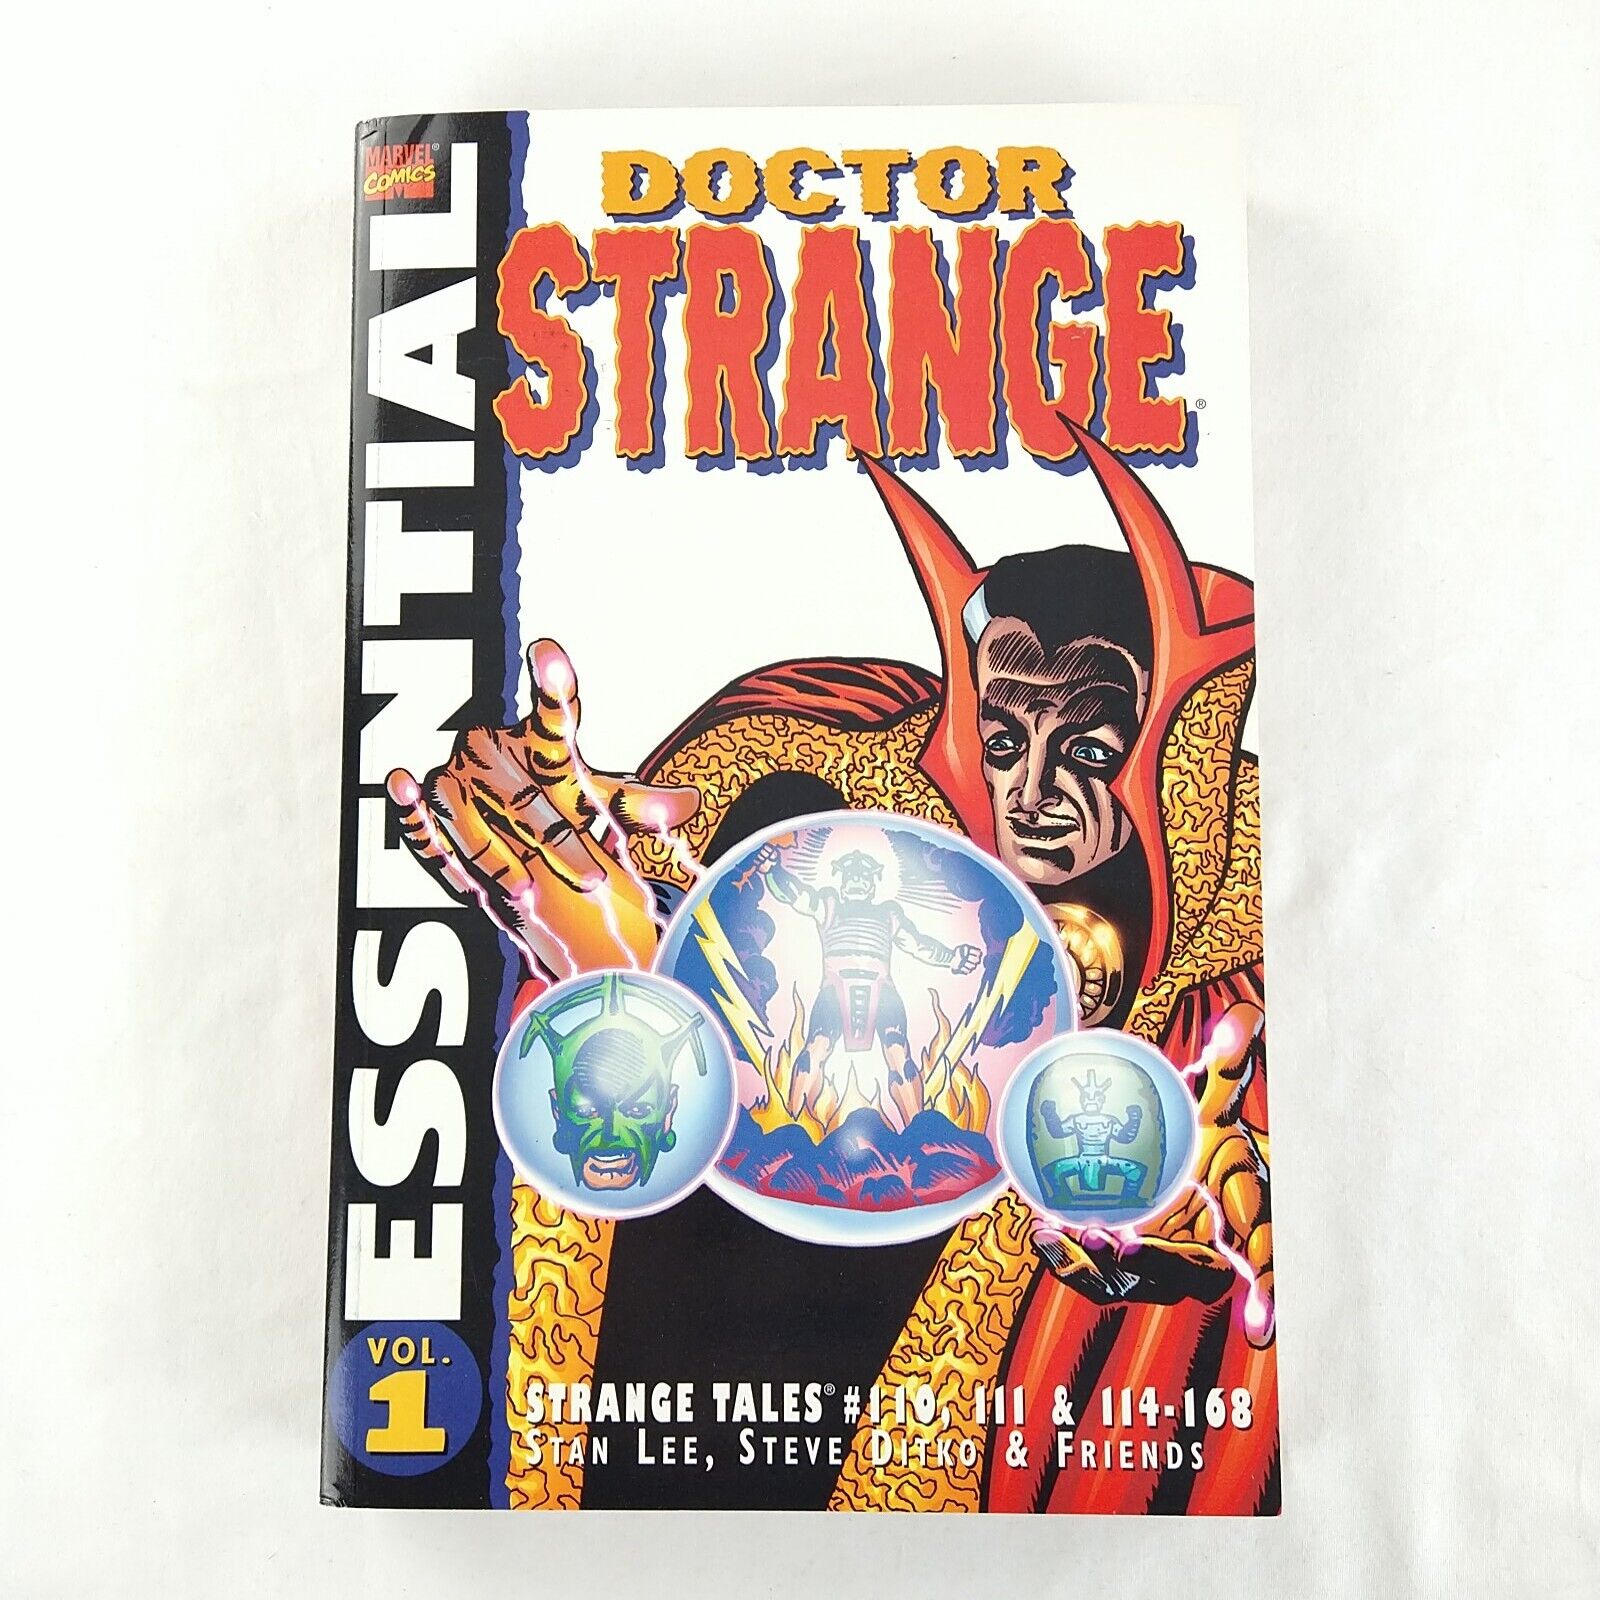 Essential Doctor Strange Volume #1 TPB Collects Strange Tales 111 114-168 2001